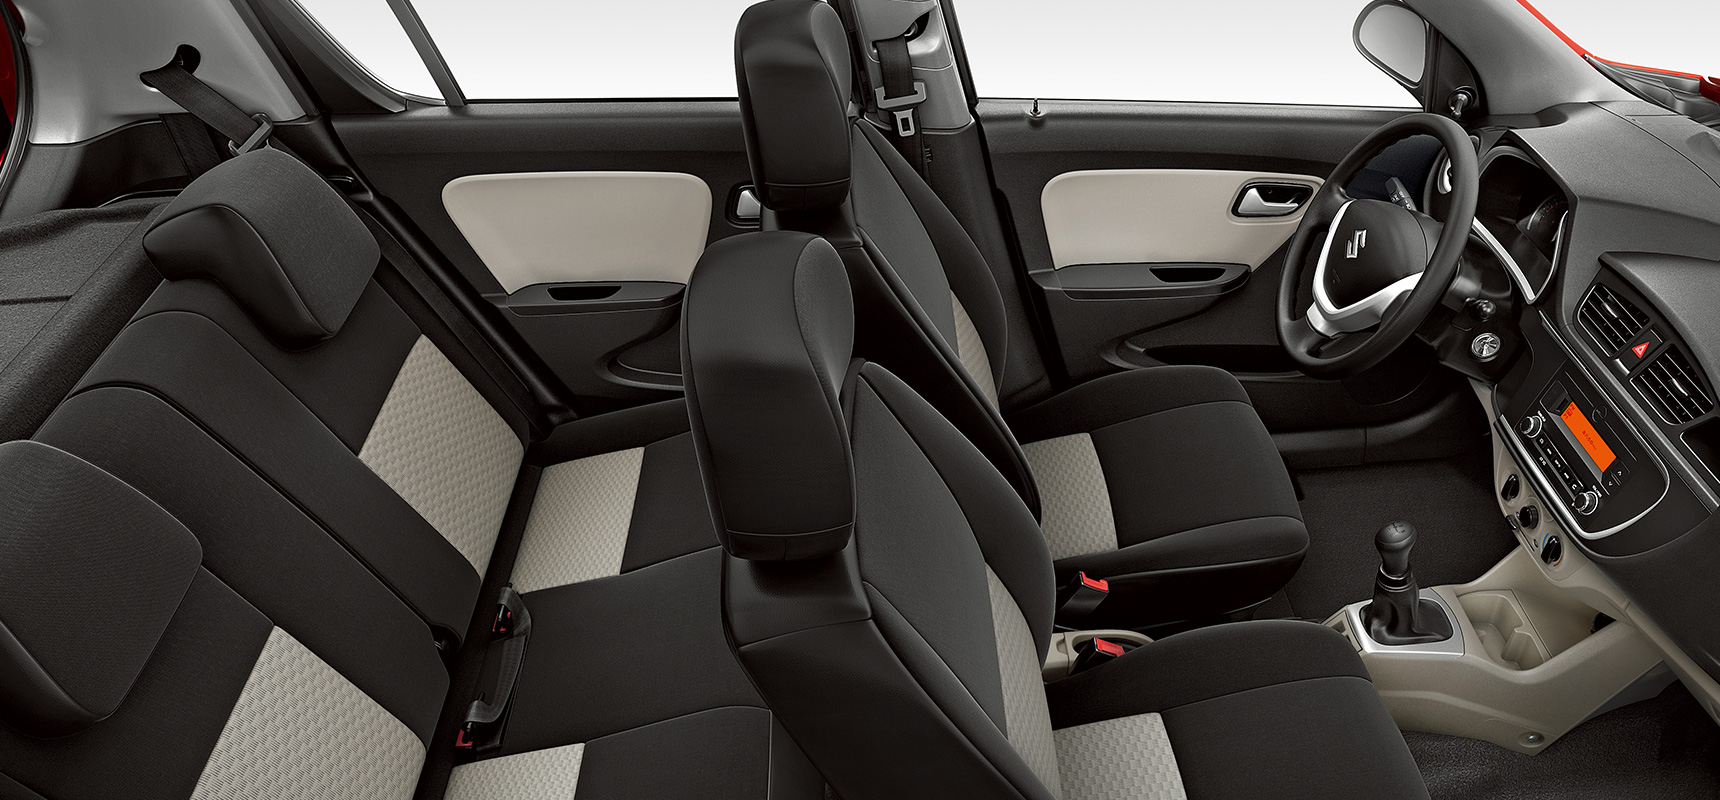 Ertiga-seven-seater-interior-side